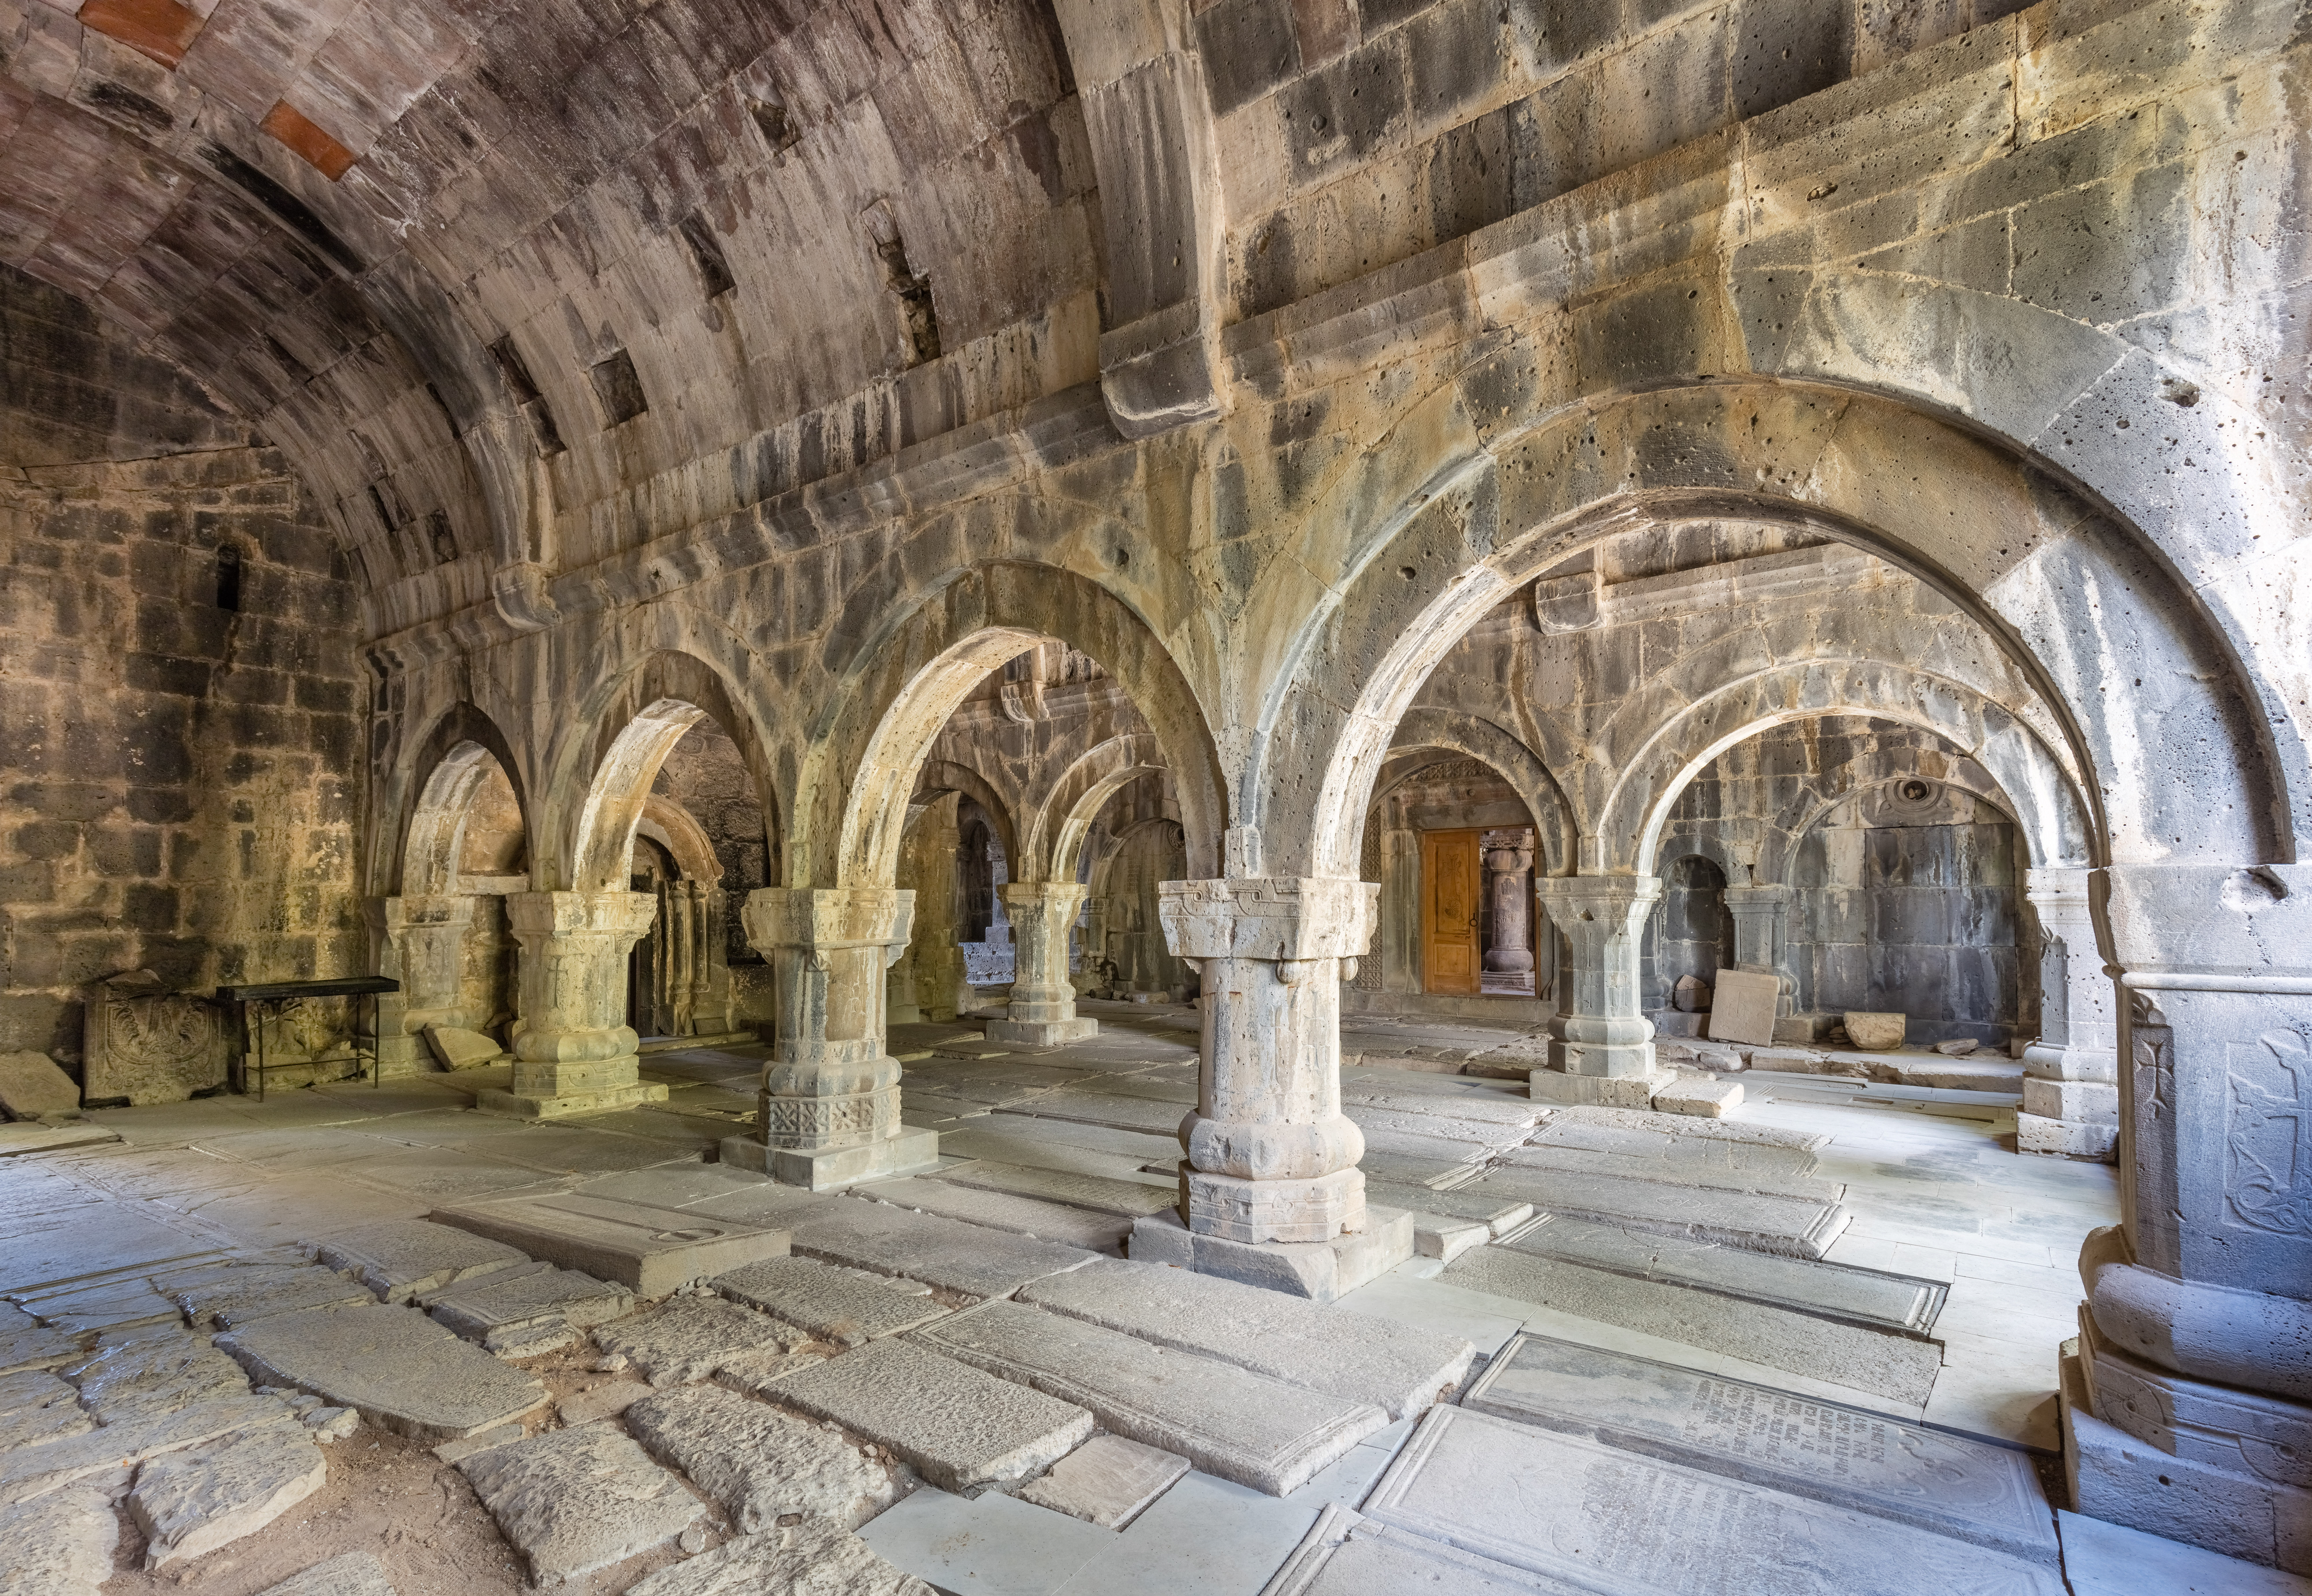 General 8001x5523 monastery Armenia church building tiles architecture pillar interior